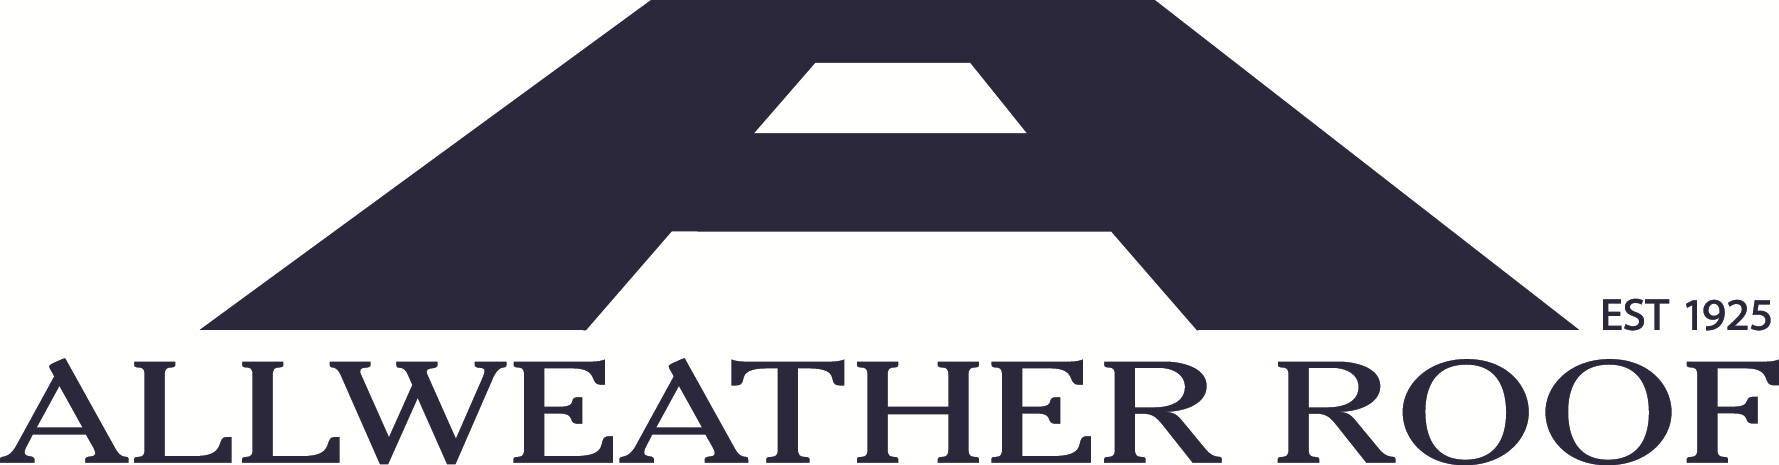 Allweather Roof logo